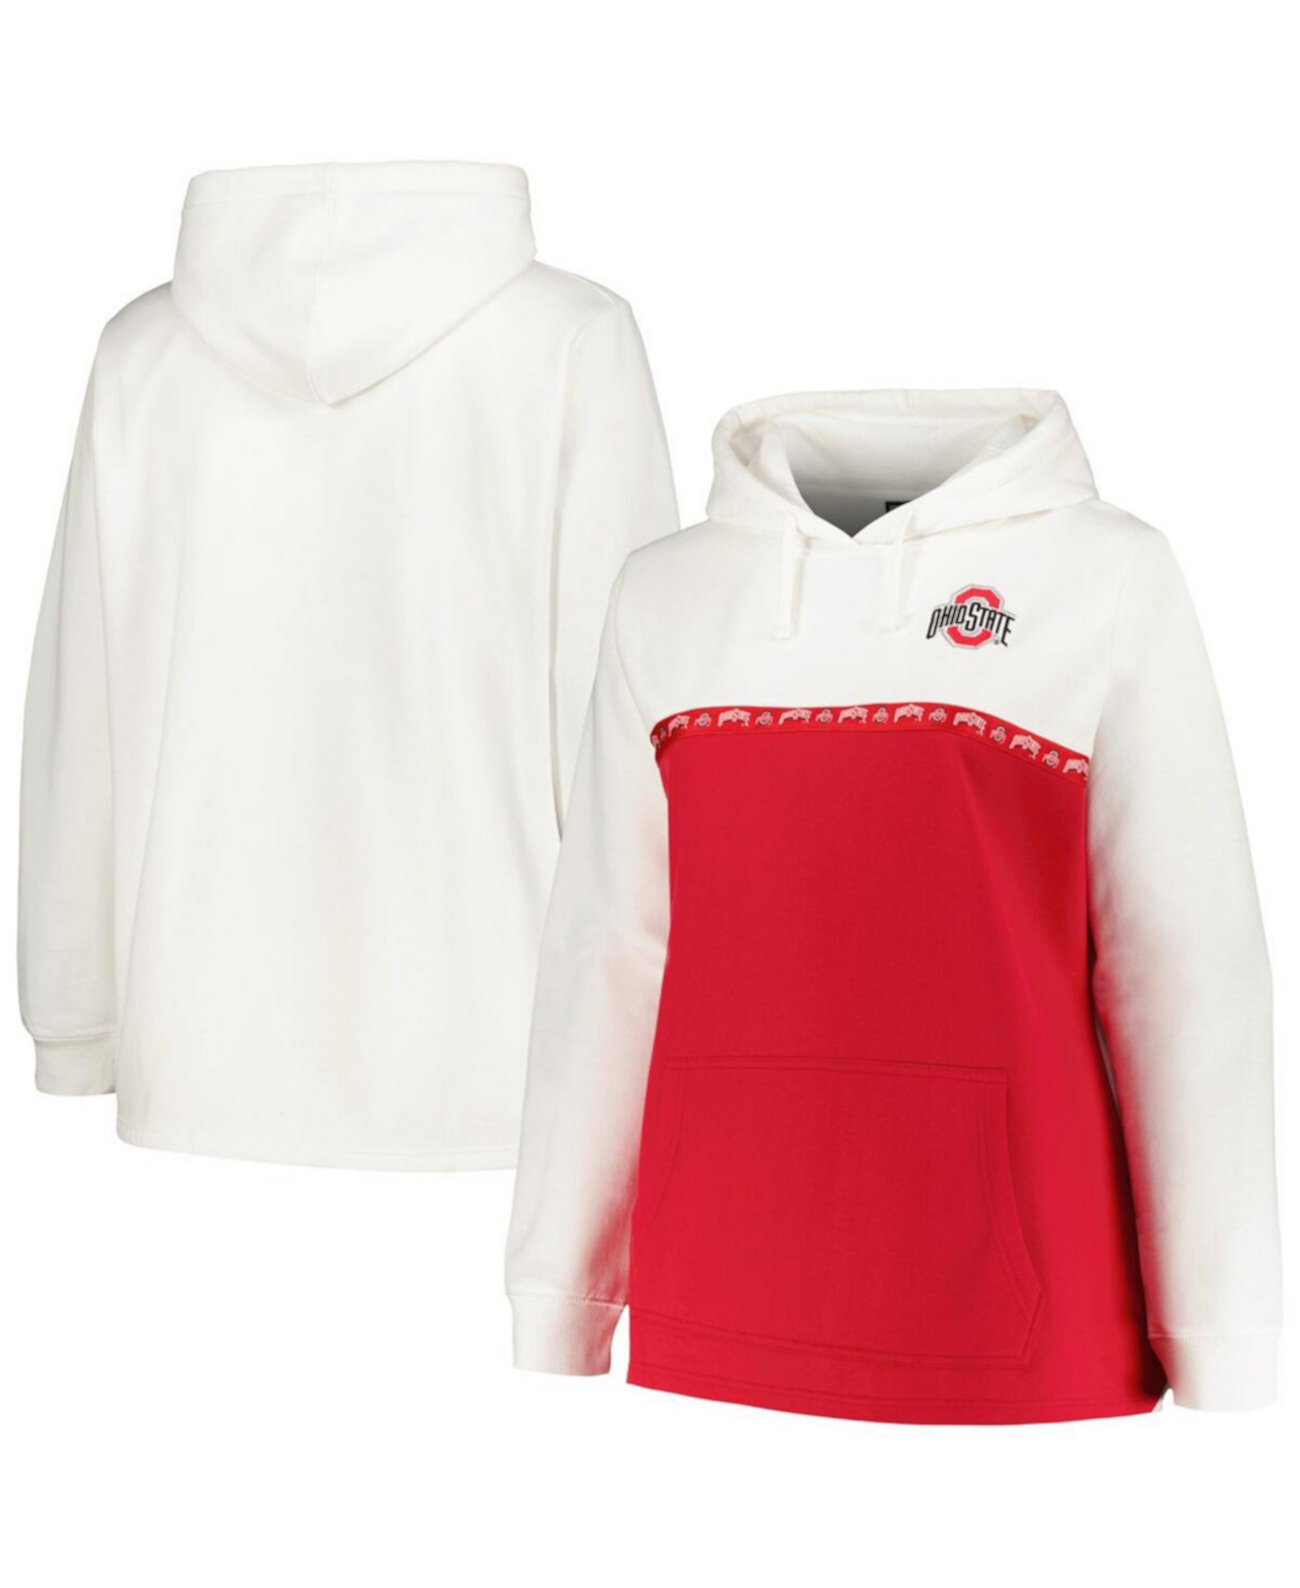 Женский белый, алый пуловер с капюшоном Ohio State Buckeyes большого размера с лентой Profile